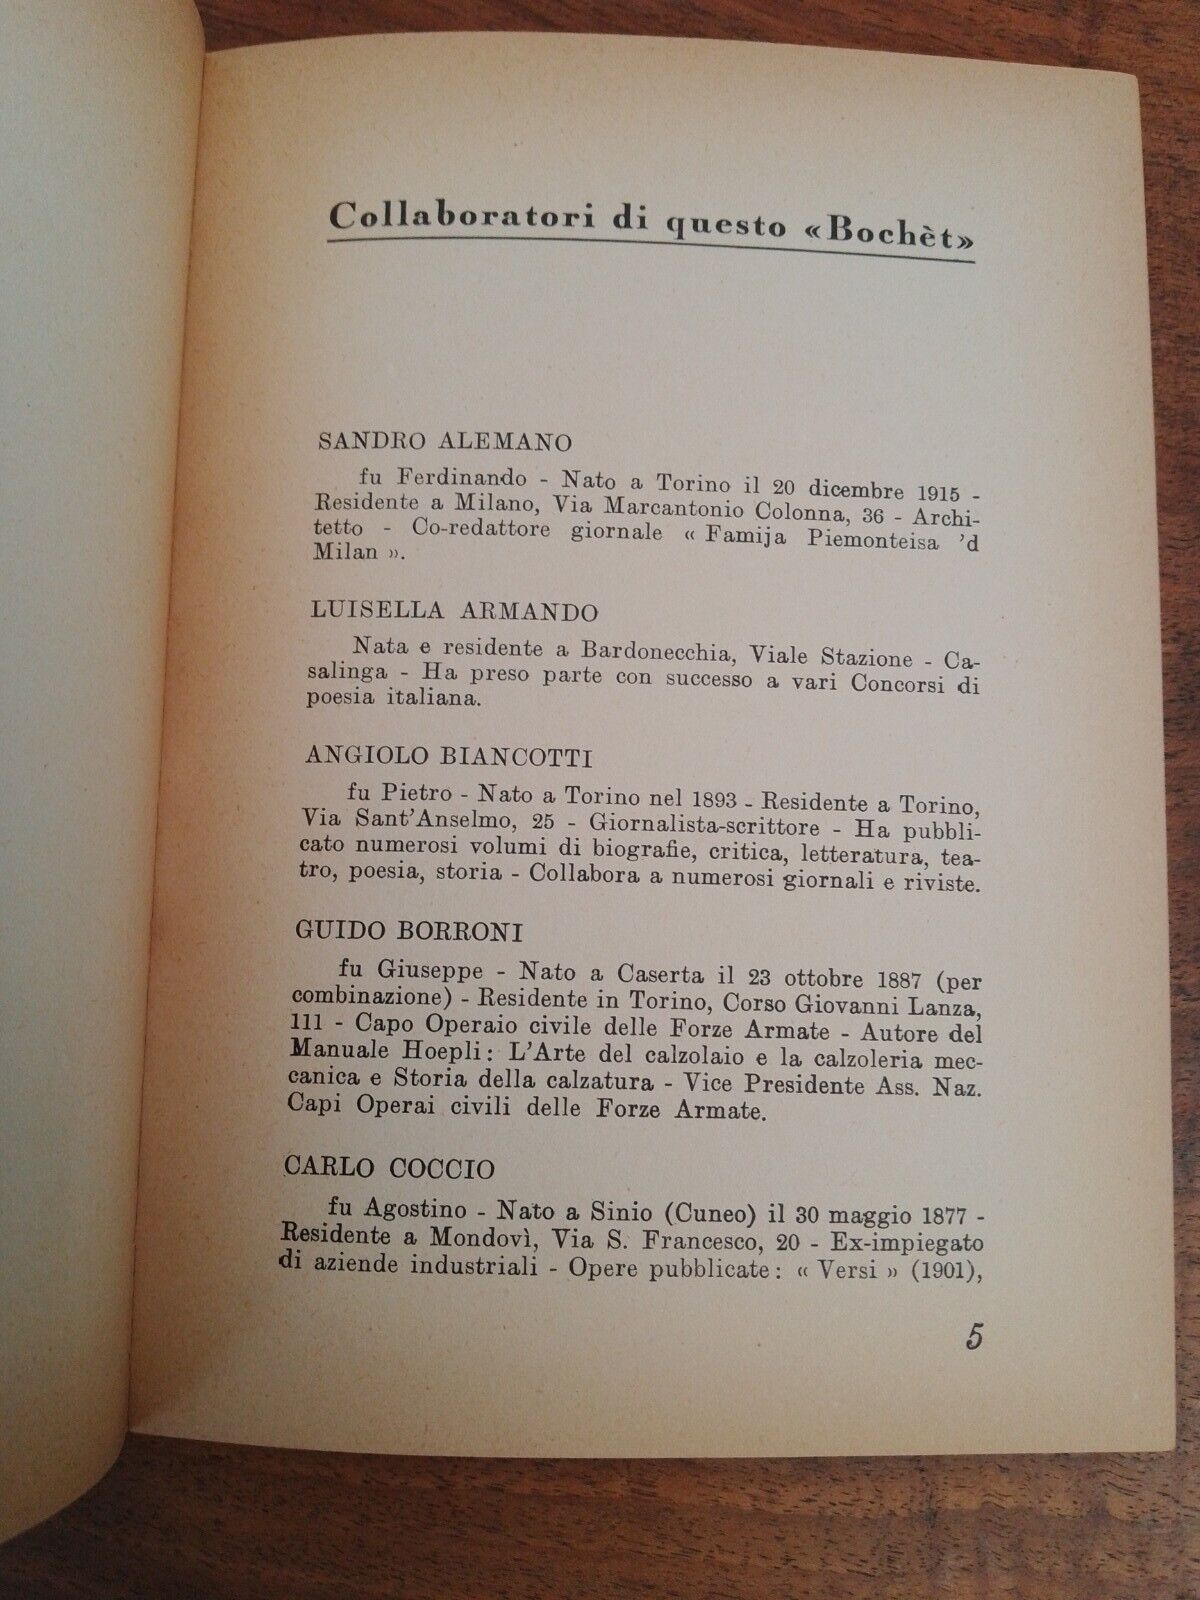 'L BOCHET - Concors 'd Poesia Piemonteisa "Nino Costa" -6 piccoli volumi 1951-59